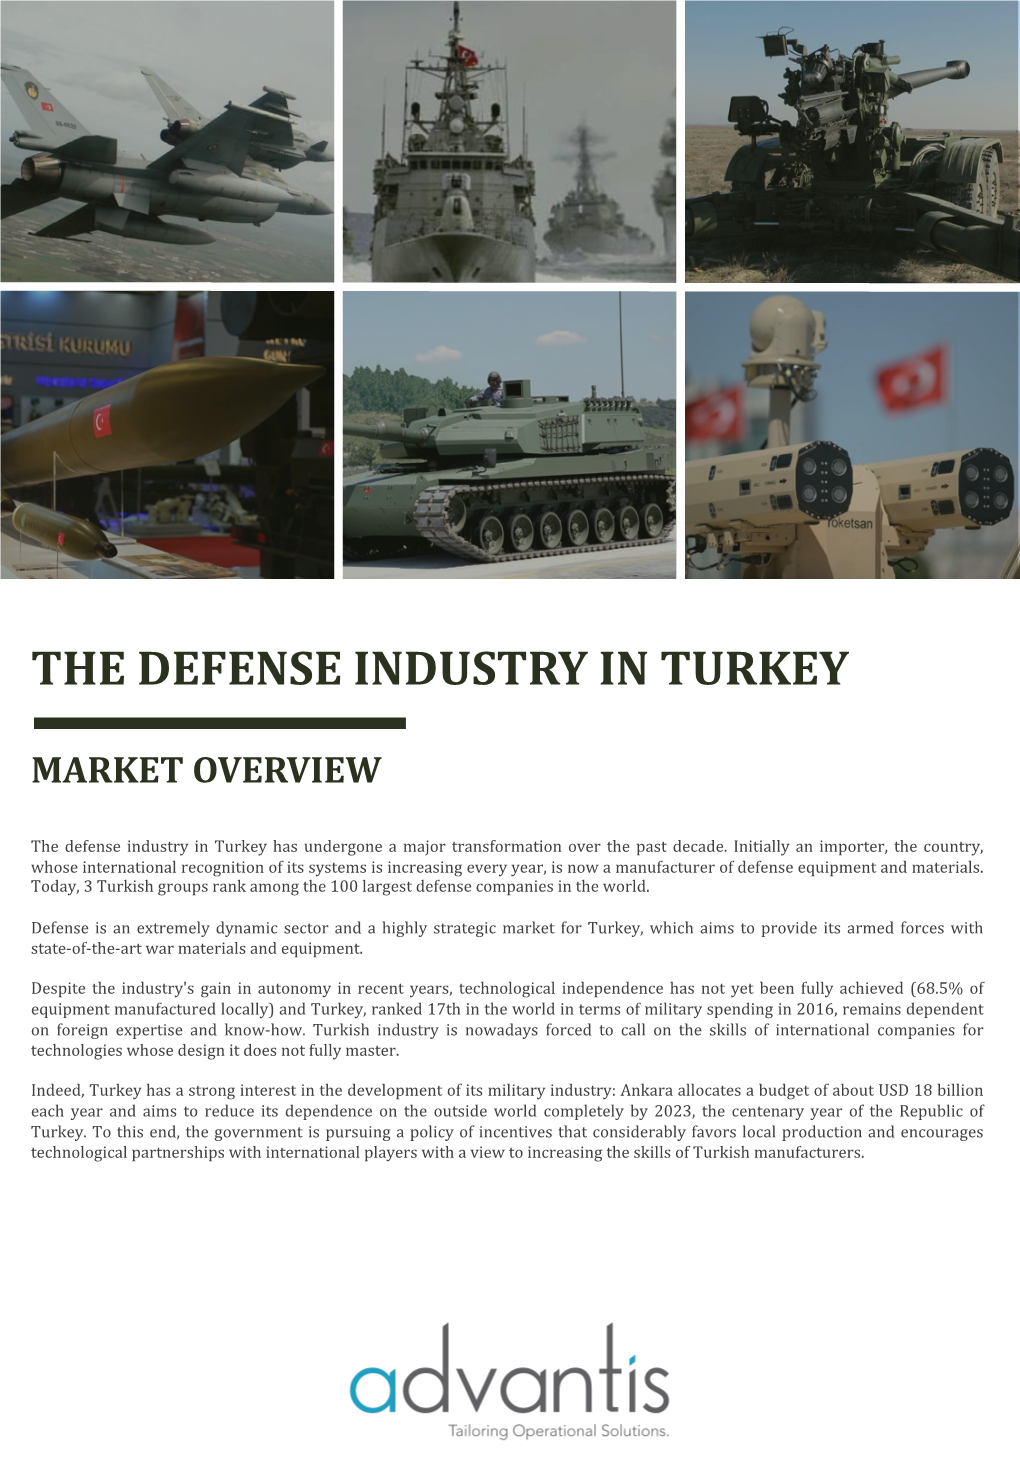 The Defense Industry in Turkey